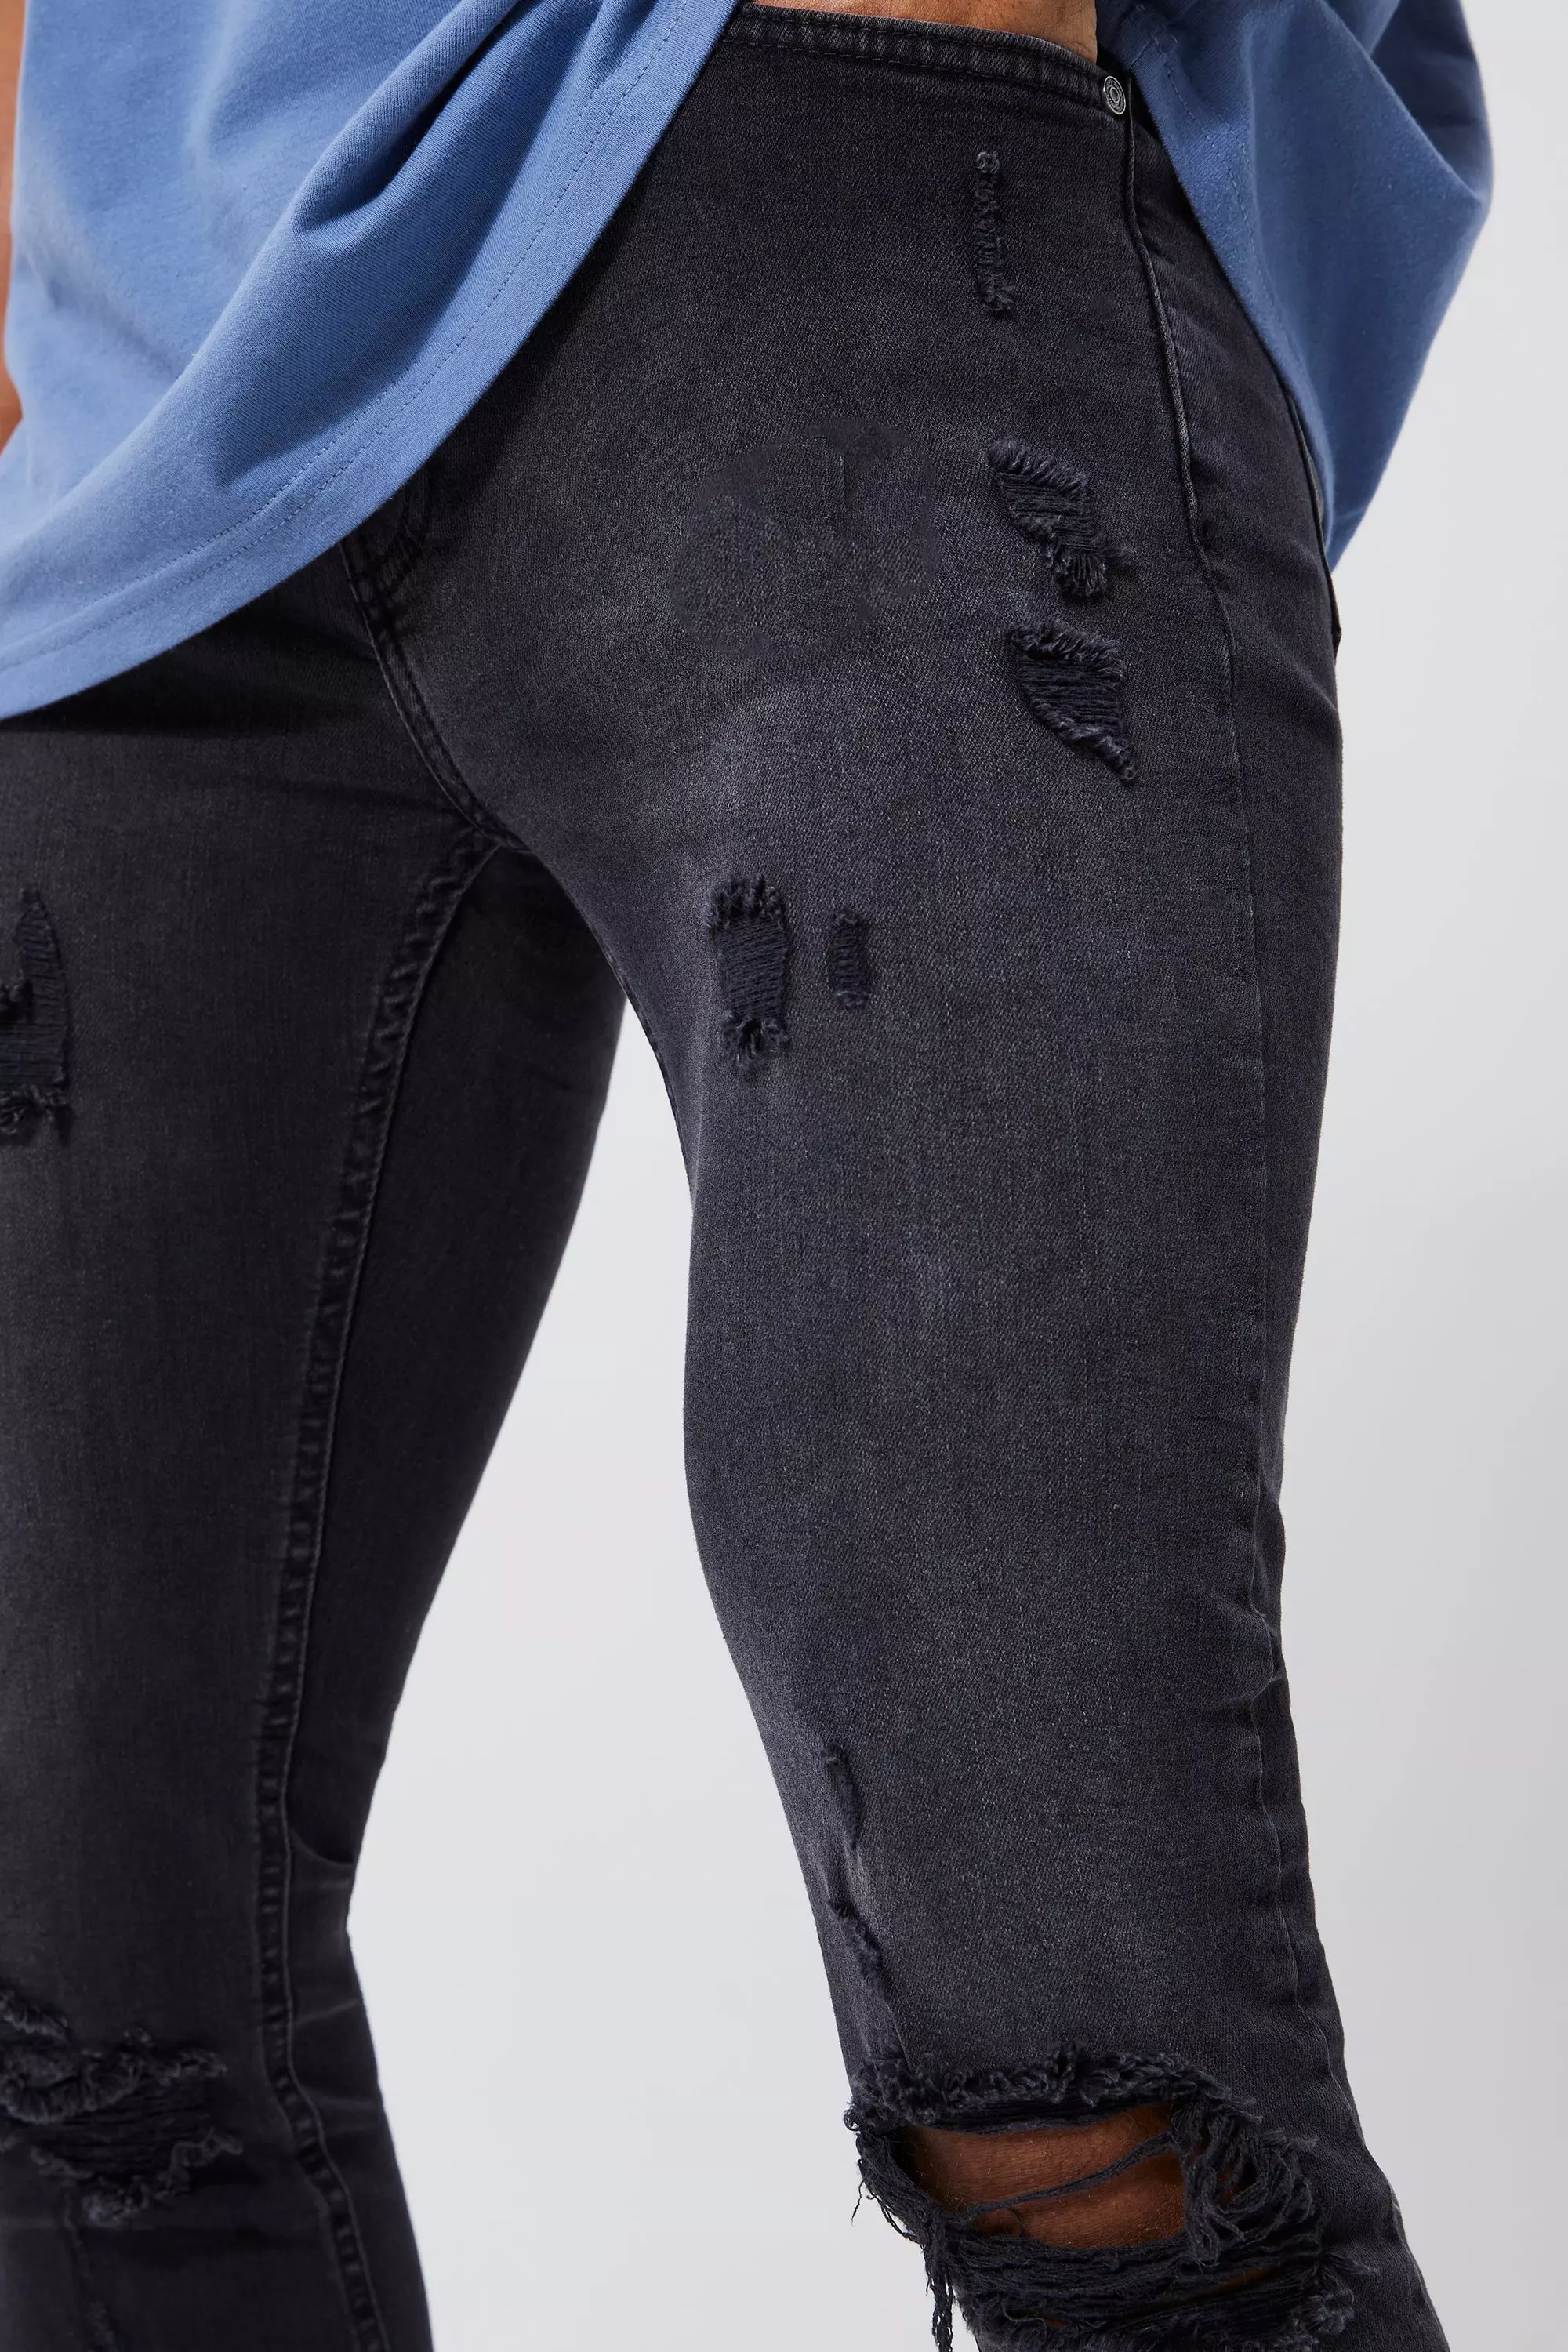 Buy online Mens Slim Fit Slash Knee Jeans from Clothing for Men by